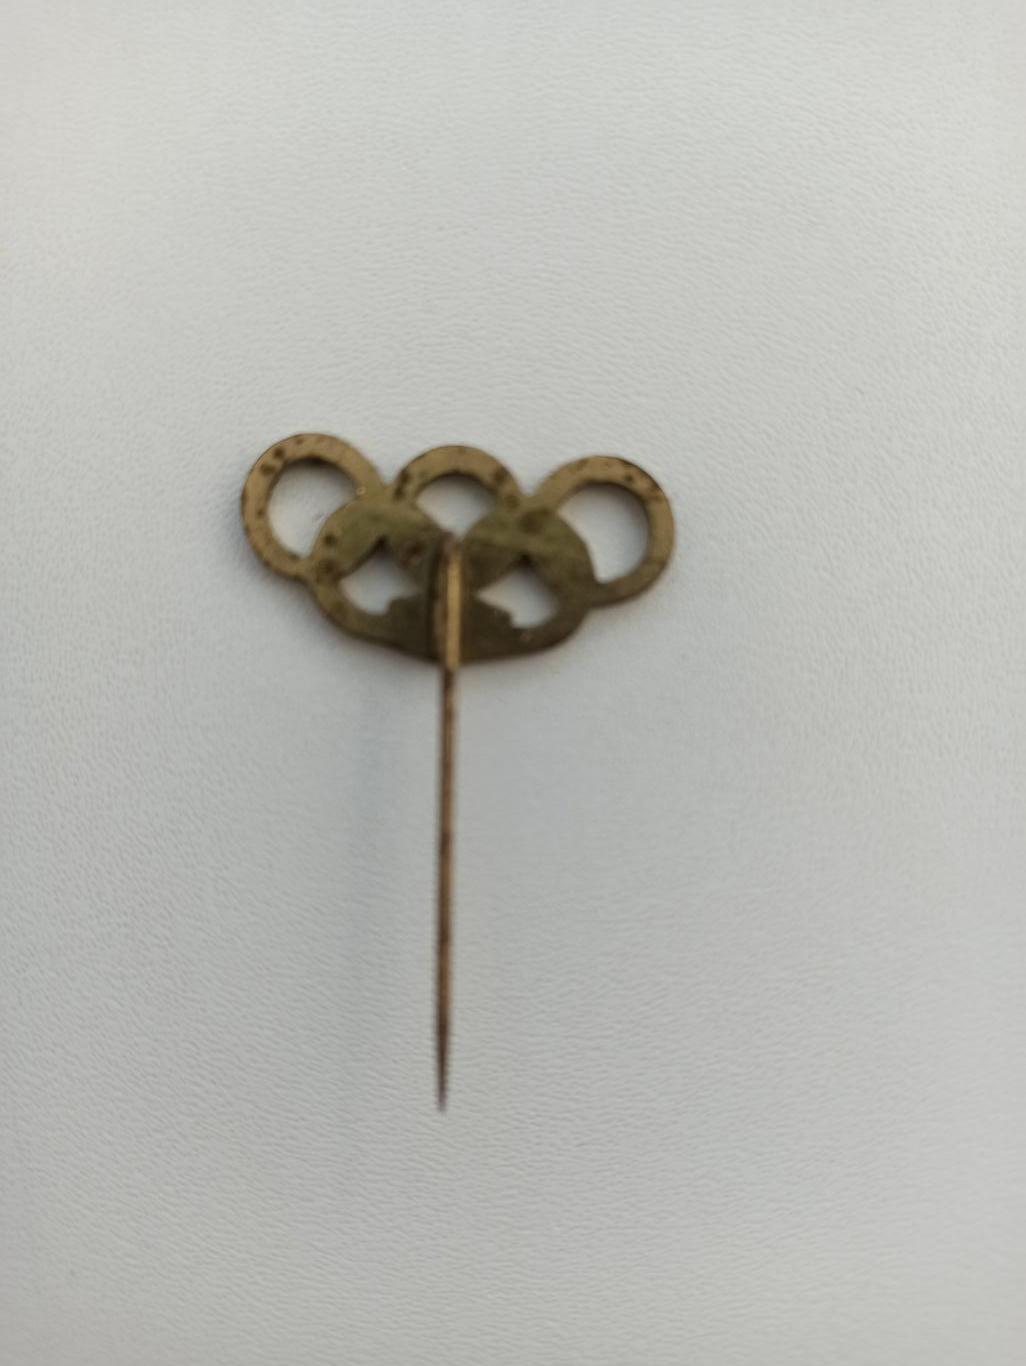 Олимпиада, 1968, олимпийские кольца, тяжелый металл 1